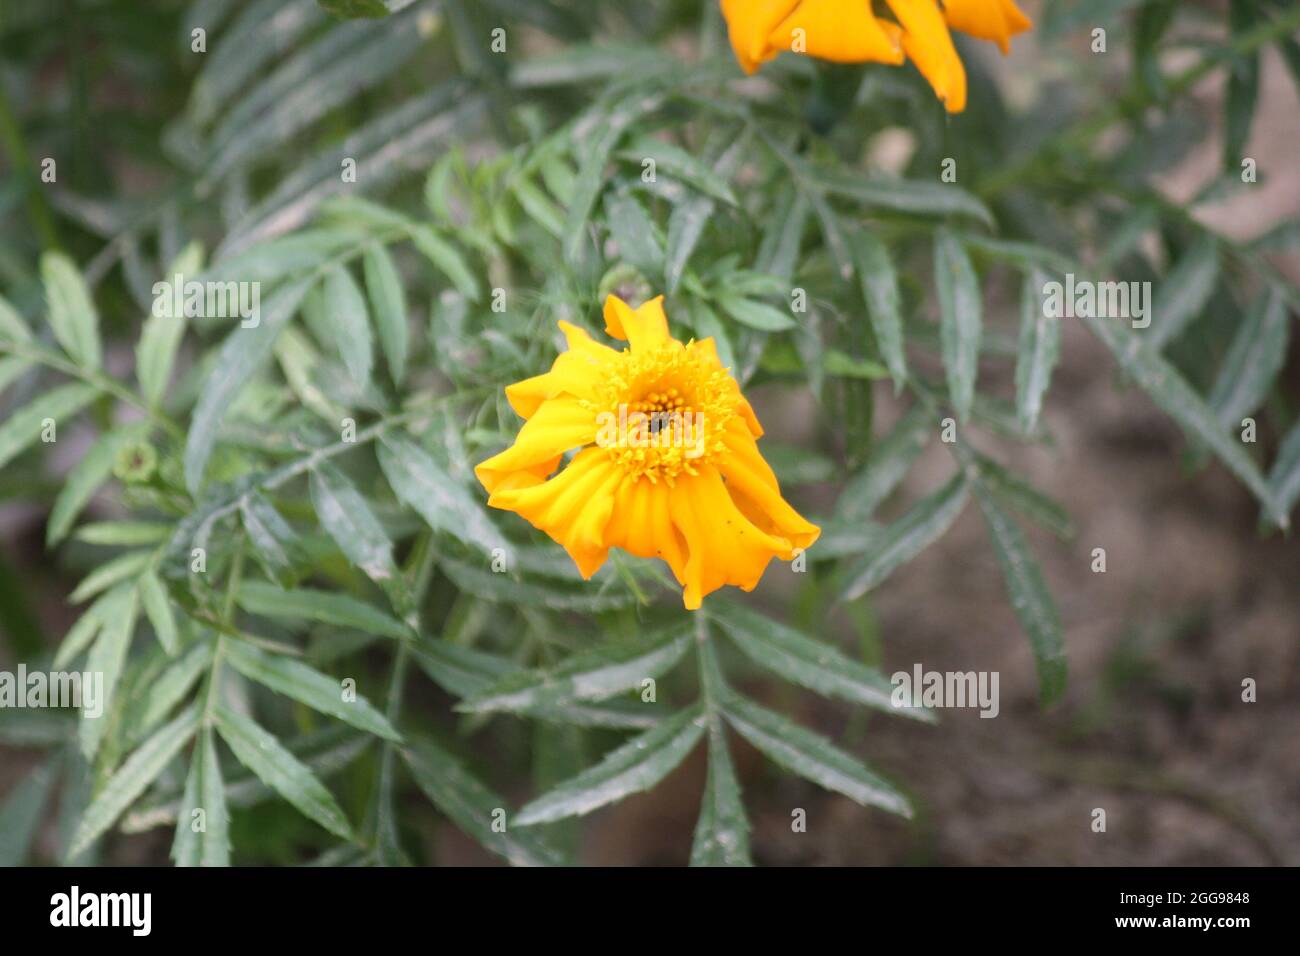 Lemmon's marigold (Tagetes lemmonii) flowers in bloom Stock Photo